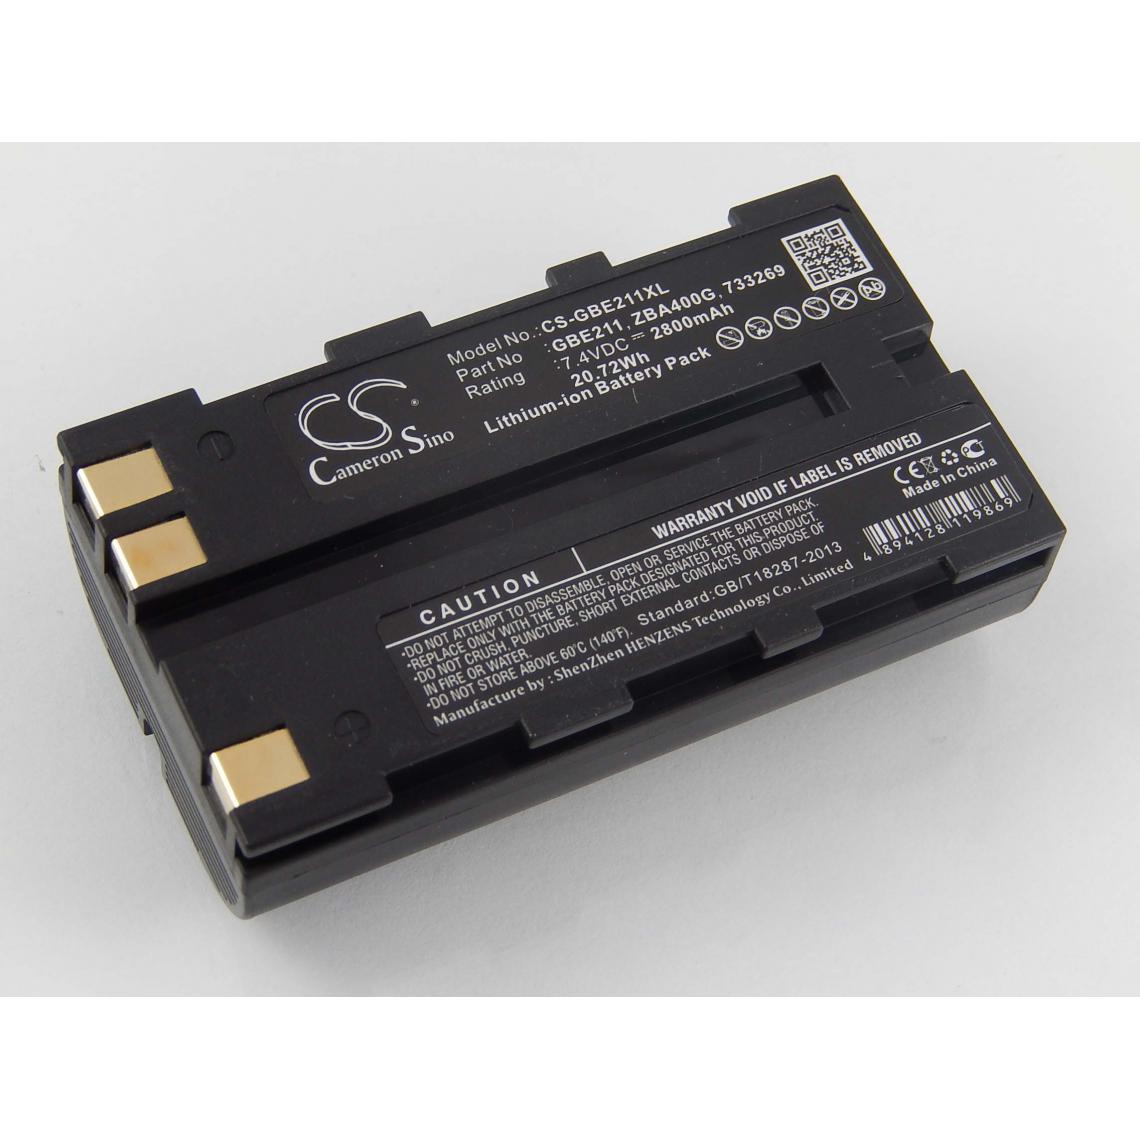 Vhbw - vhbw Batterie compatible avec Leica TS16 dispositif de mesure laser, outil de mesure (2800mAh, 7,4V, Li-ion) - Piles rechargeables